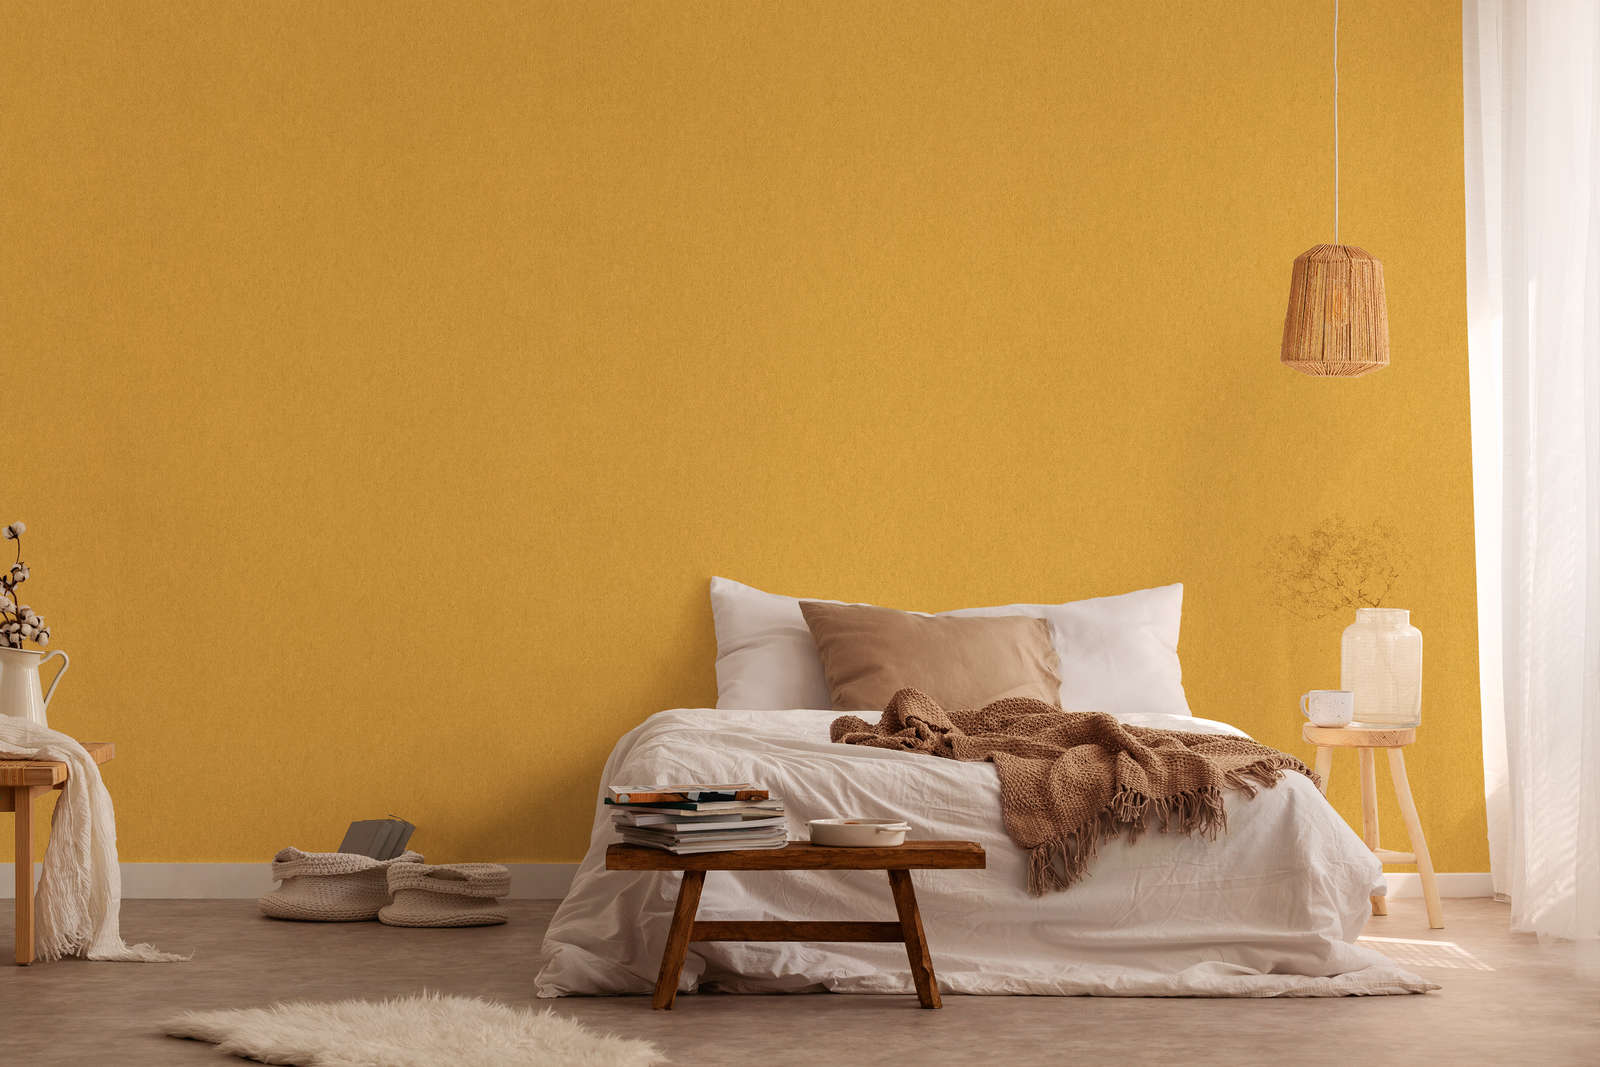             Plain wallpaper with structure optics matt & smooth - yellow
        